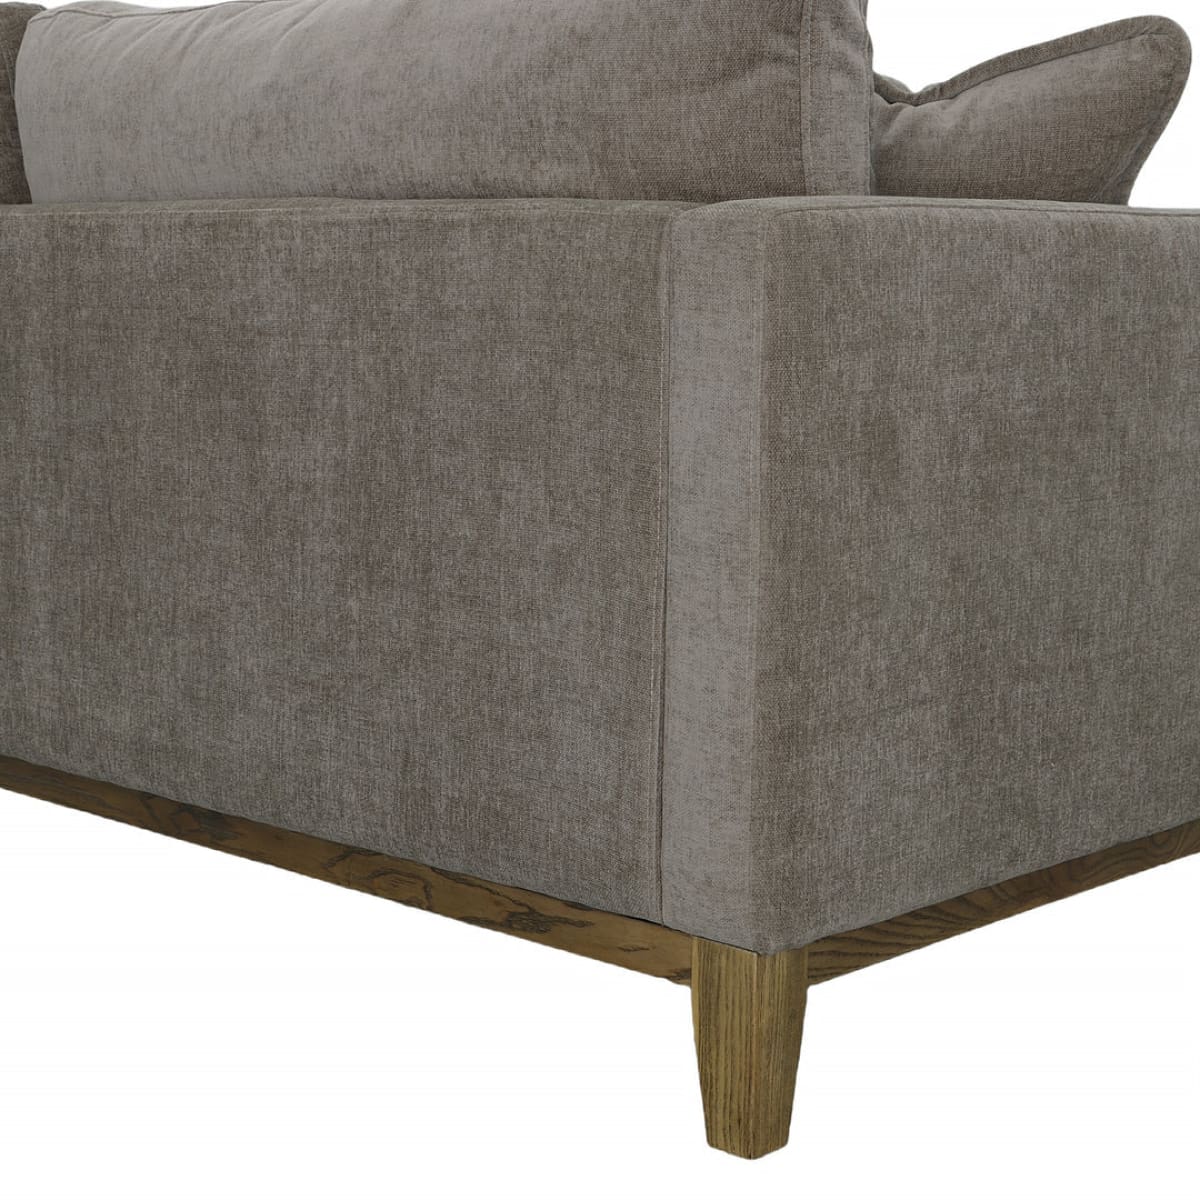 Burbank Sofa - Pecan Brown - lh-import-sofas